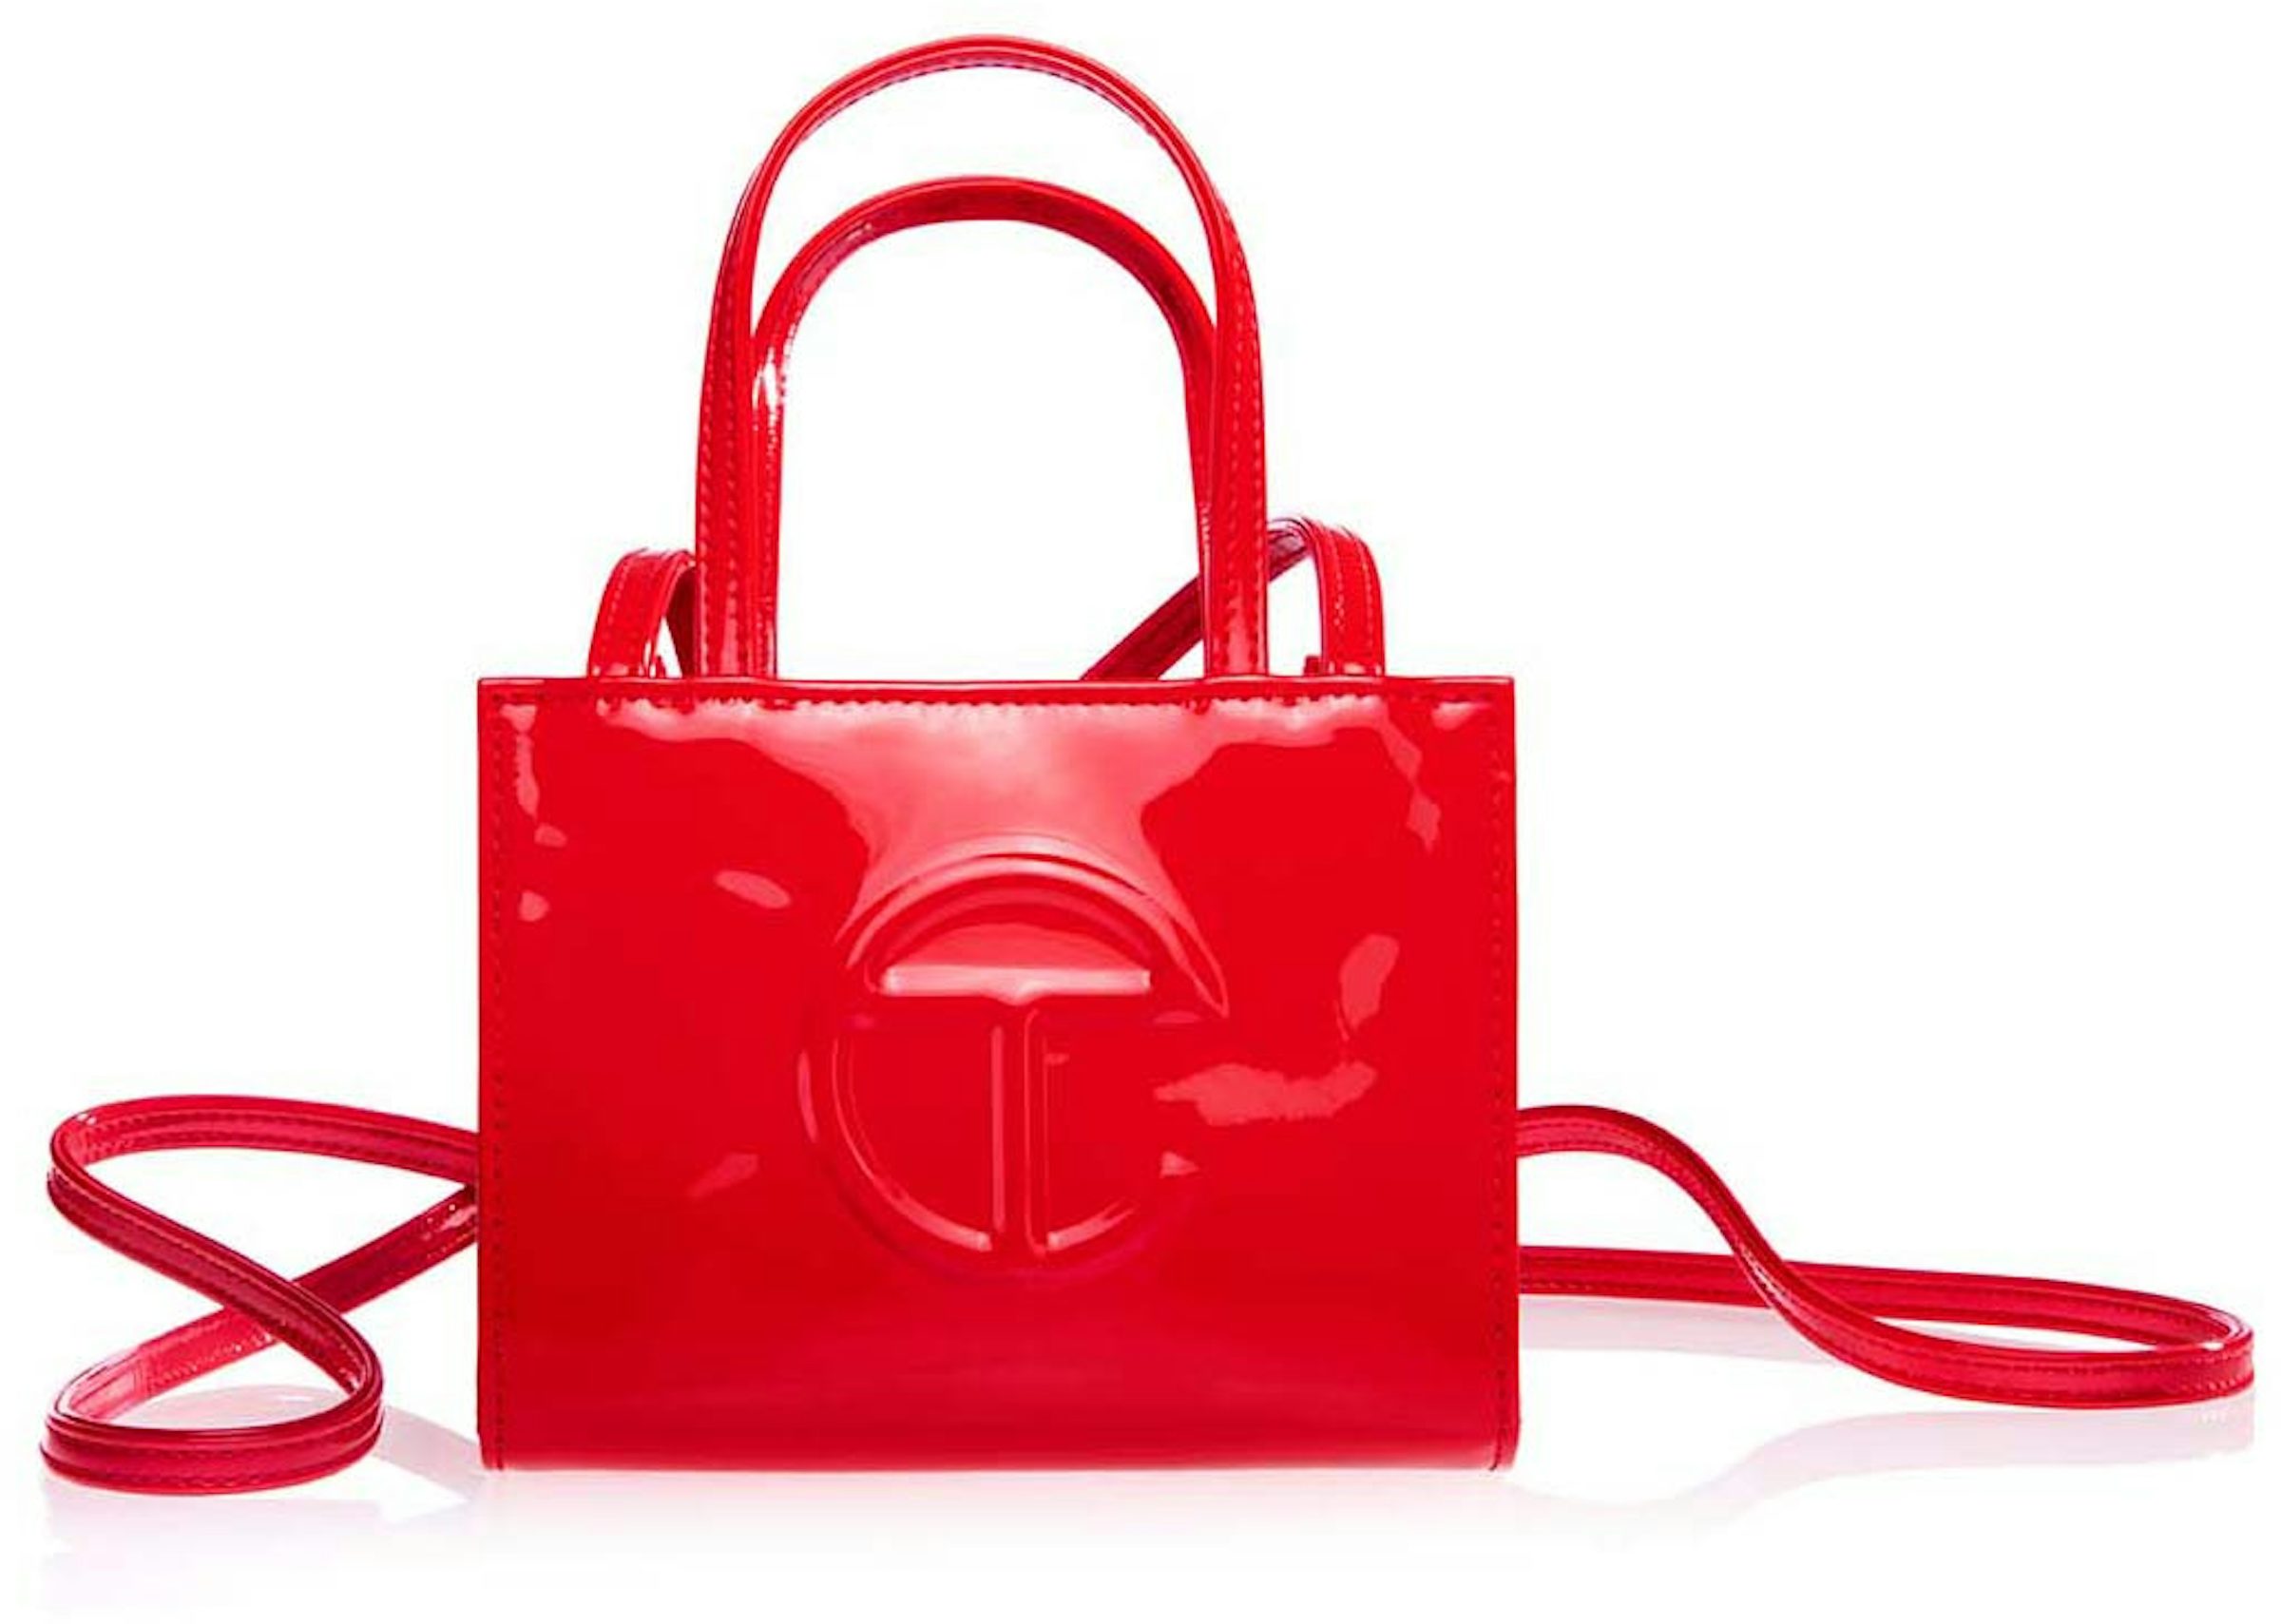 Telfar's Shopping Bag Gets the Patent Leather Treatment